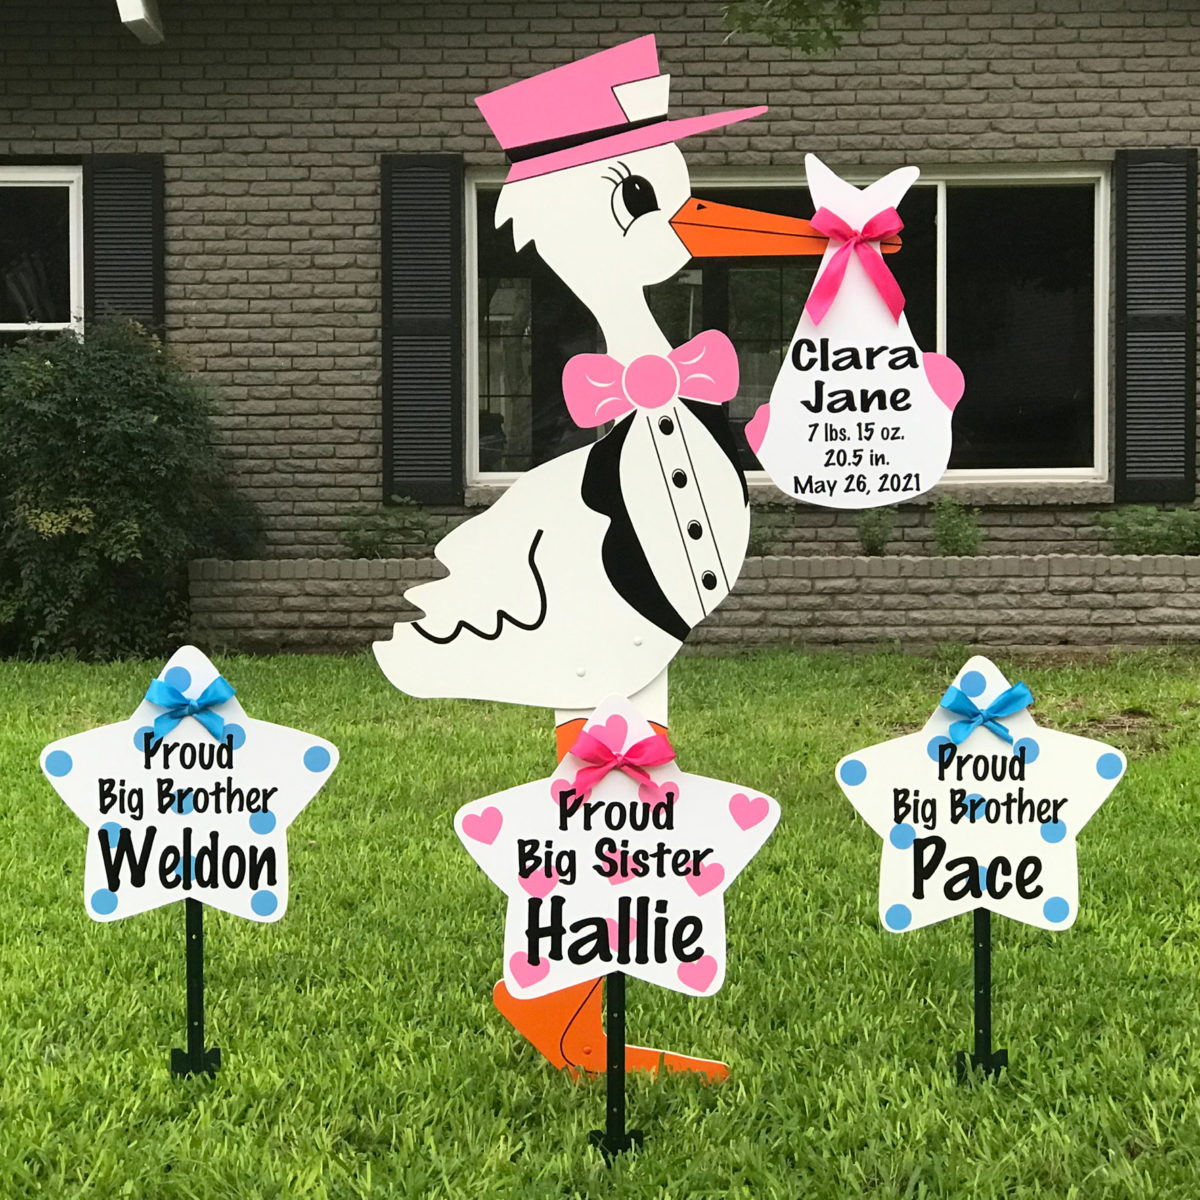 Pink Stork Sign with SIbling Stars: South Georgia Storks - Stork Sign Rentals in Valdosta, Lakepark, Hahira, Georgia